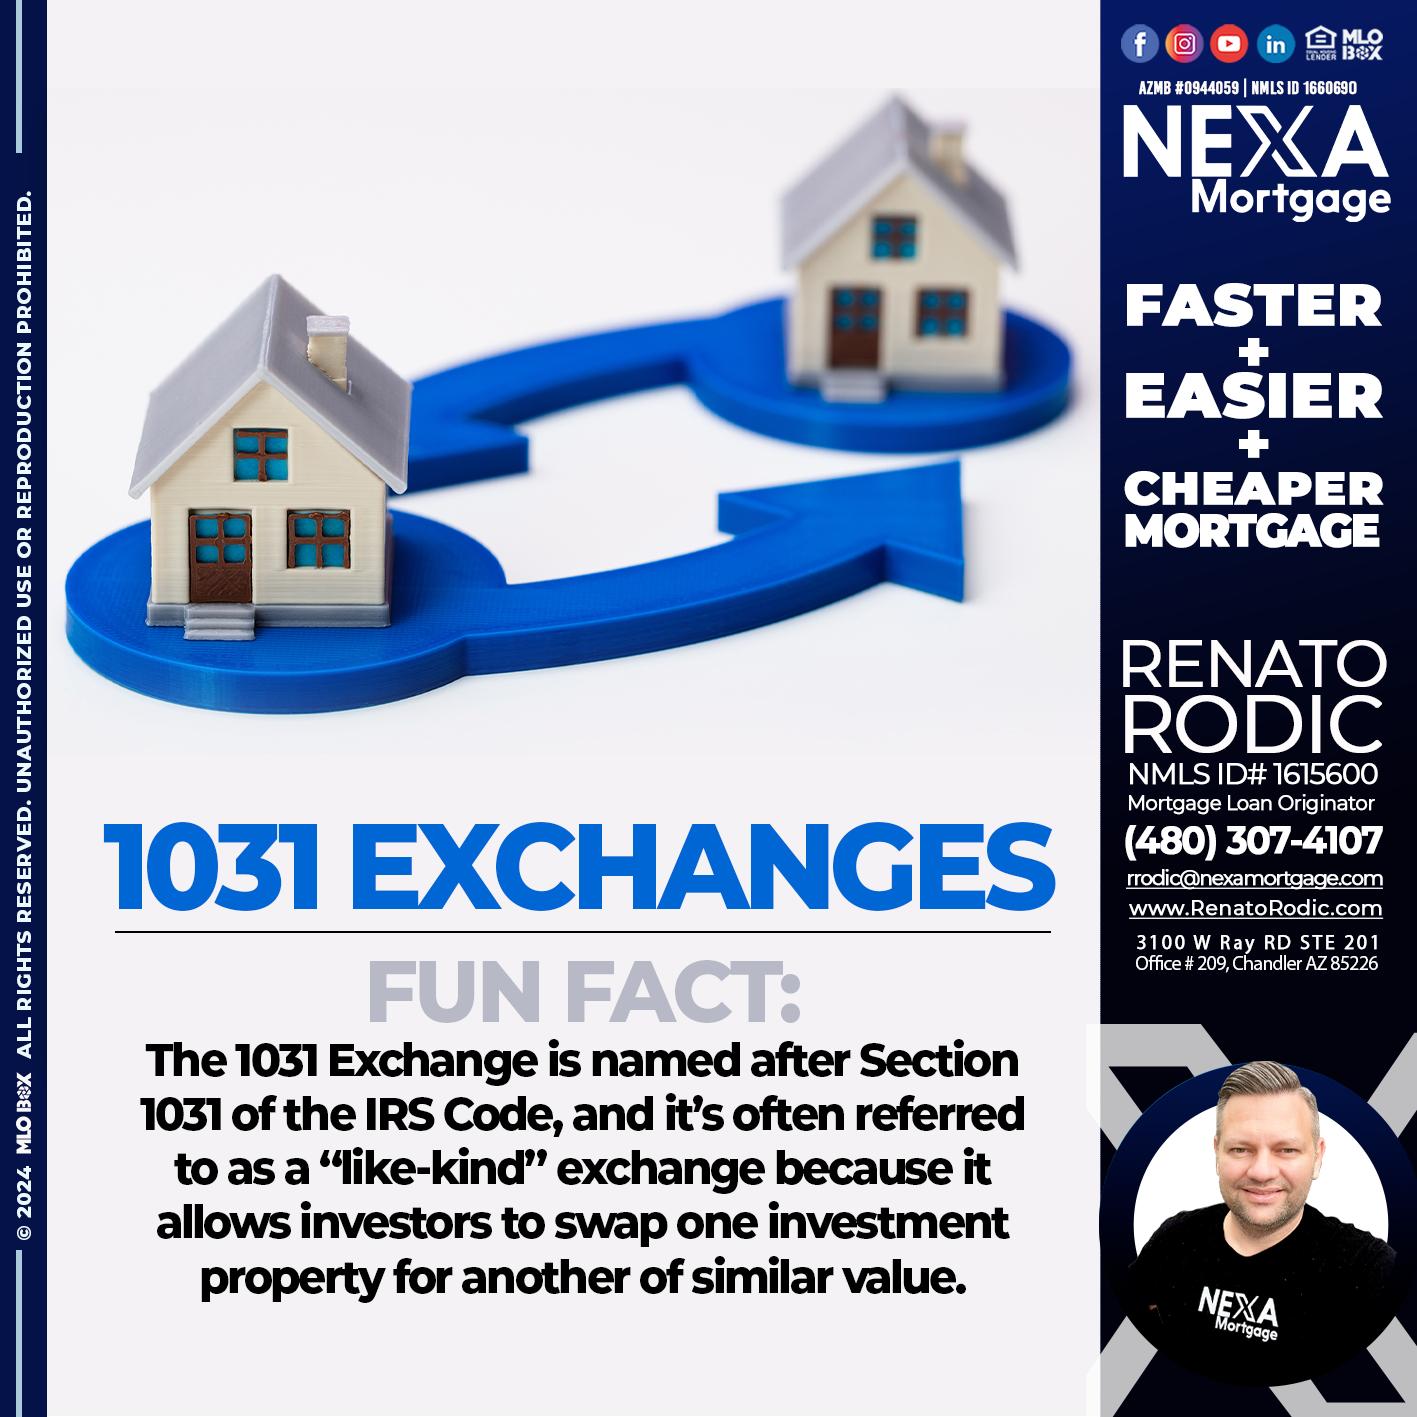 1031 exchanges - Renato Rodic -Mortgage Loan Originator